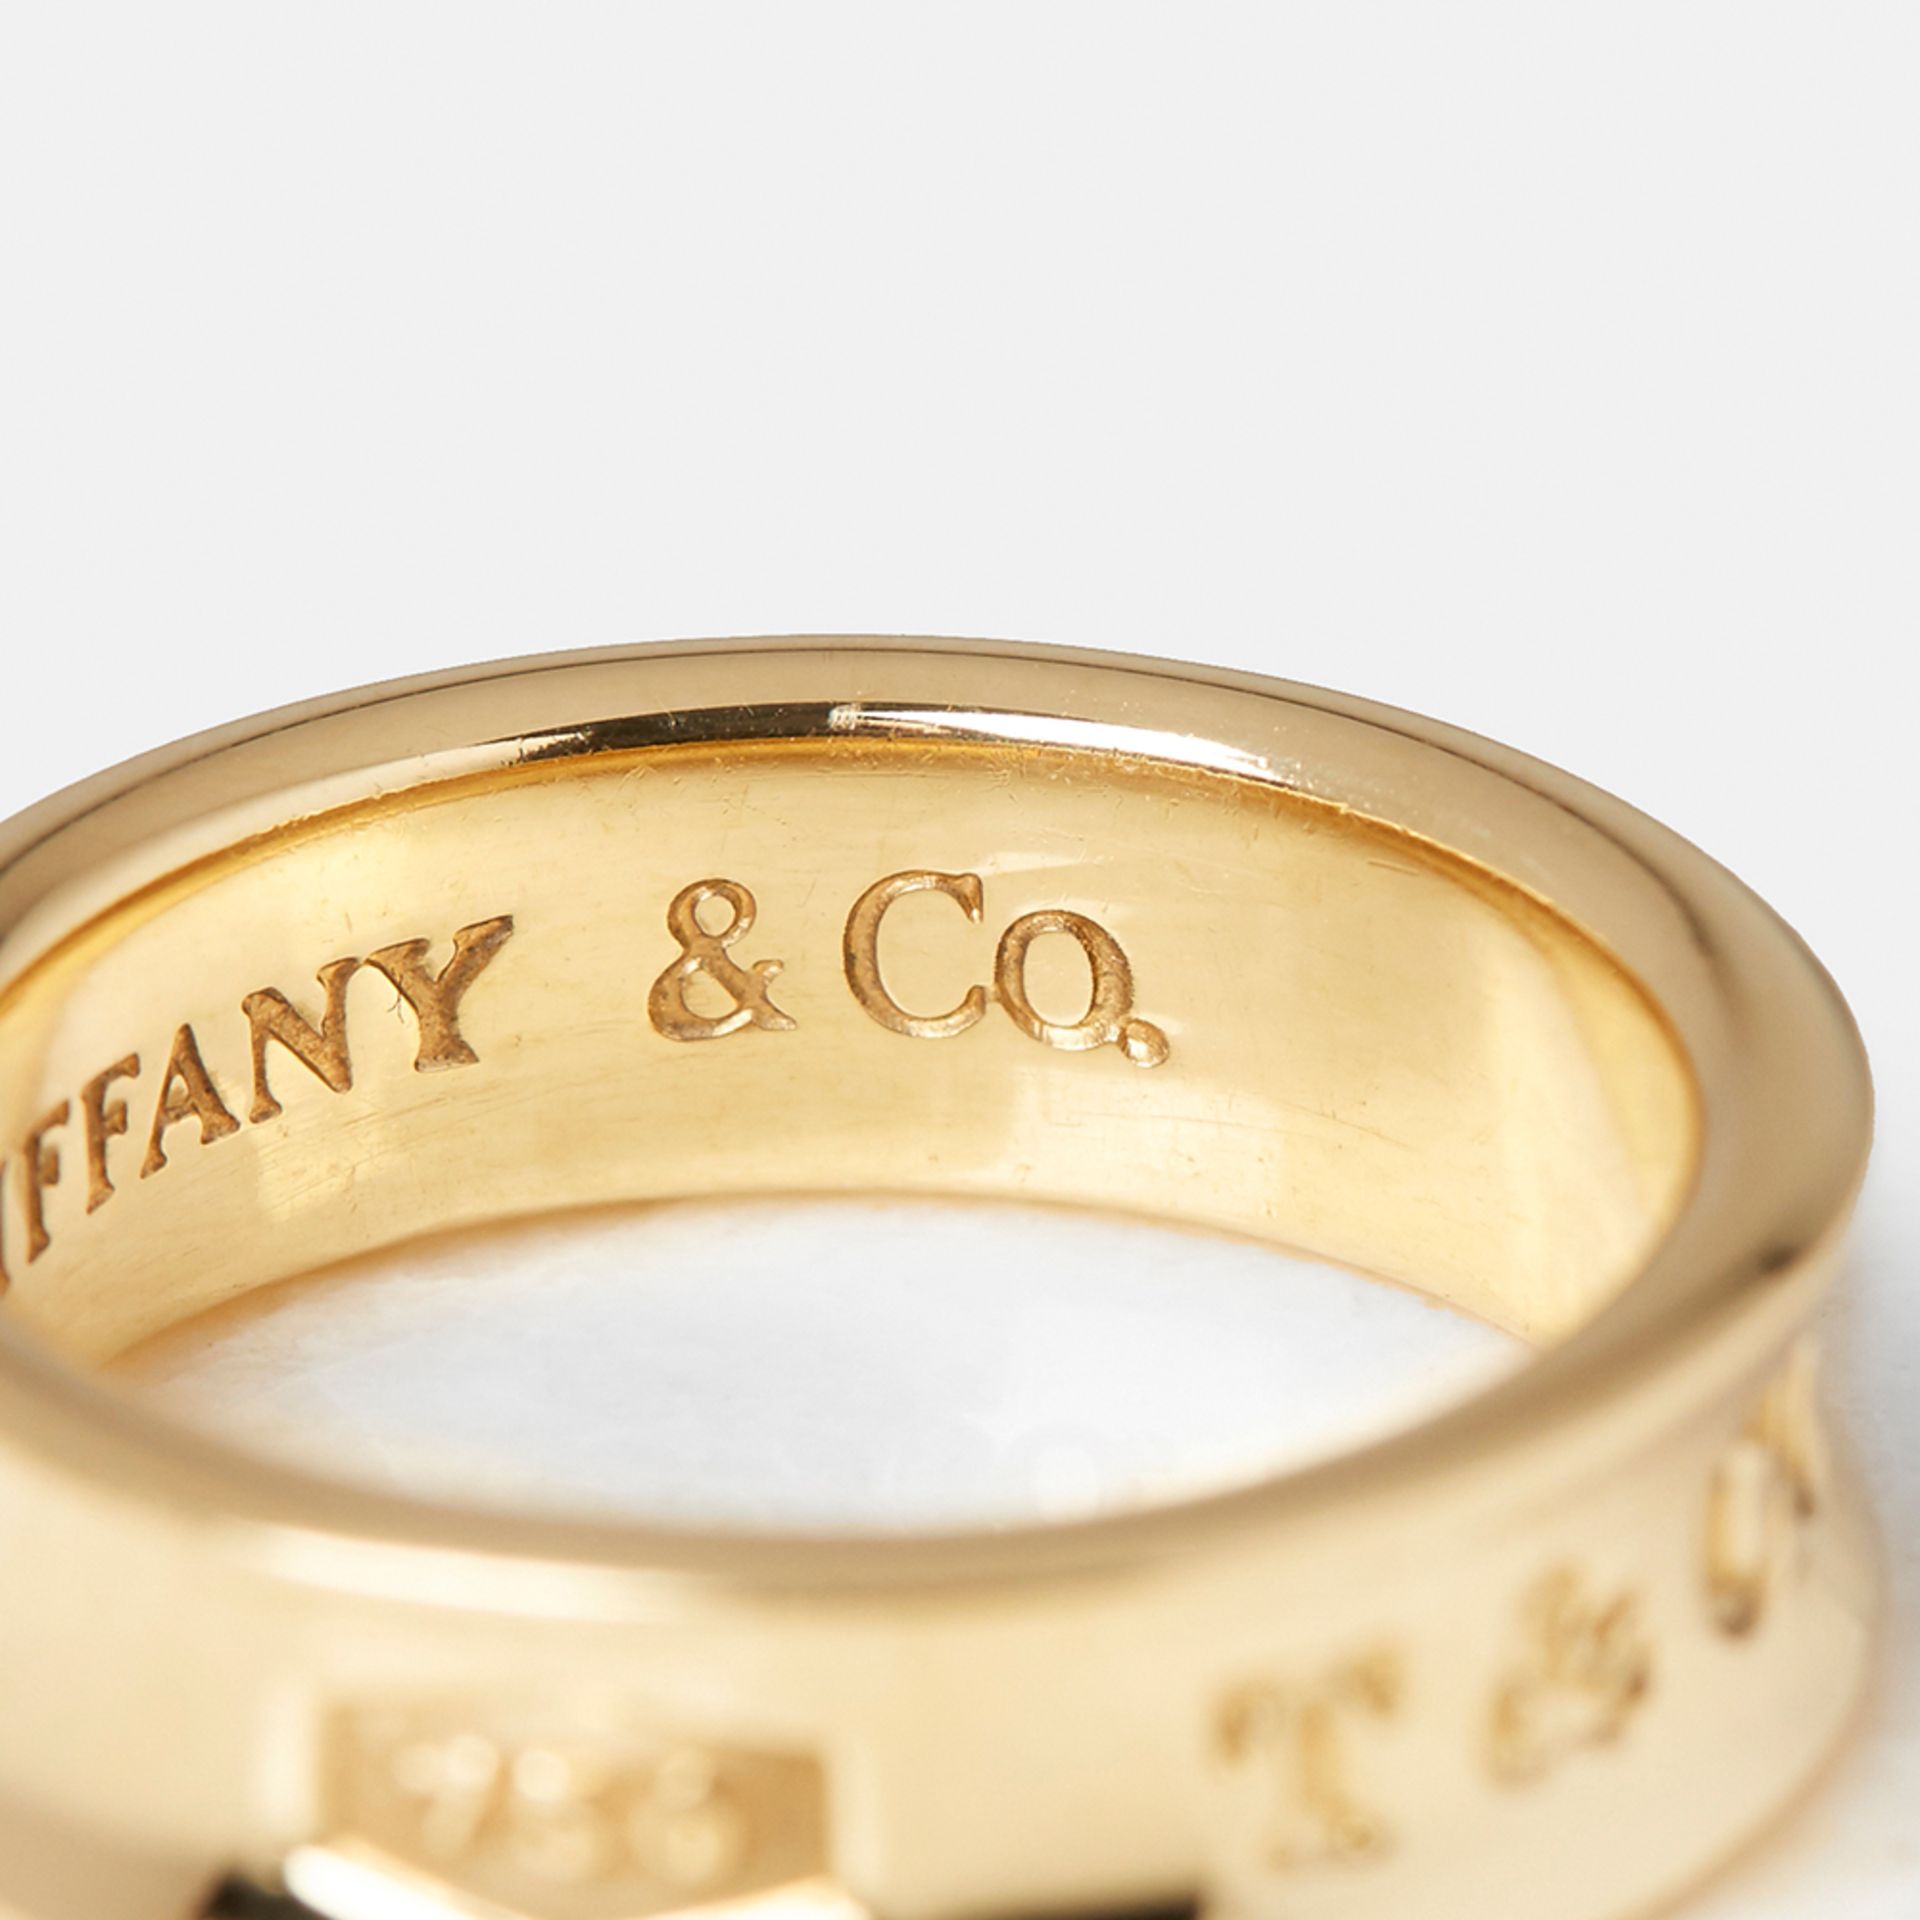 Tiffany & Co. 18k Yellow Gold Tiffany 1837 Ring - Image 8 of 8